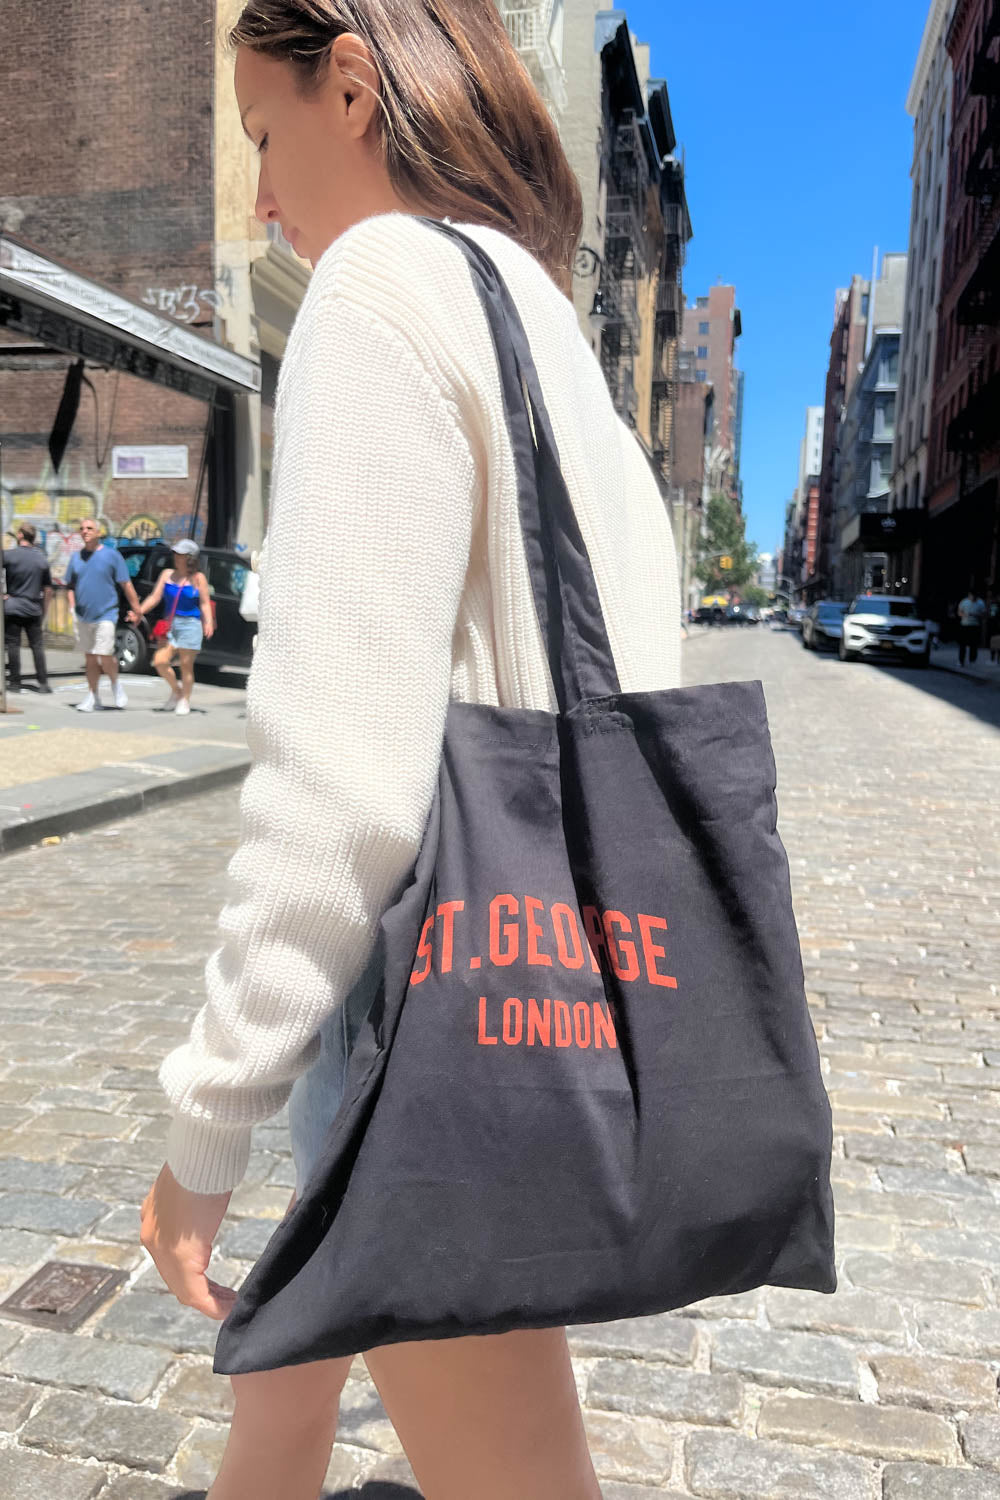 St. George London Tote Bag – Brandy Melville